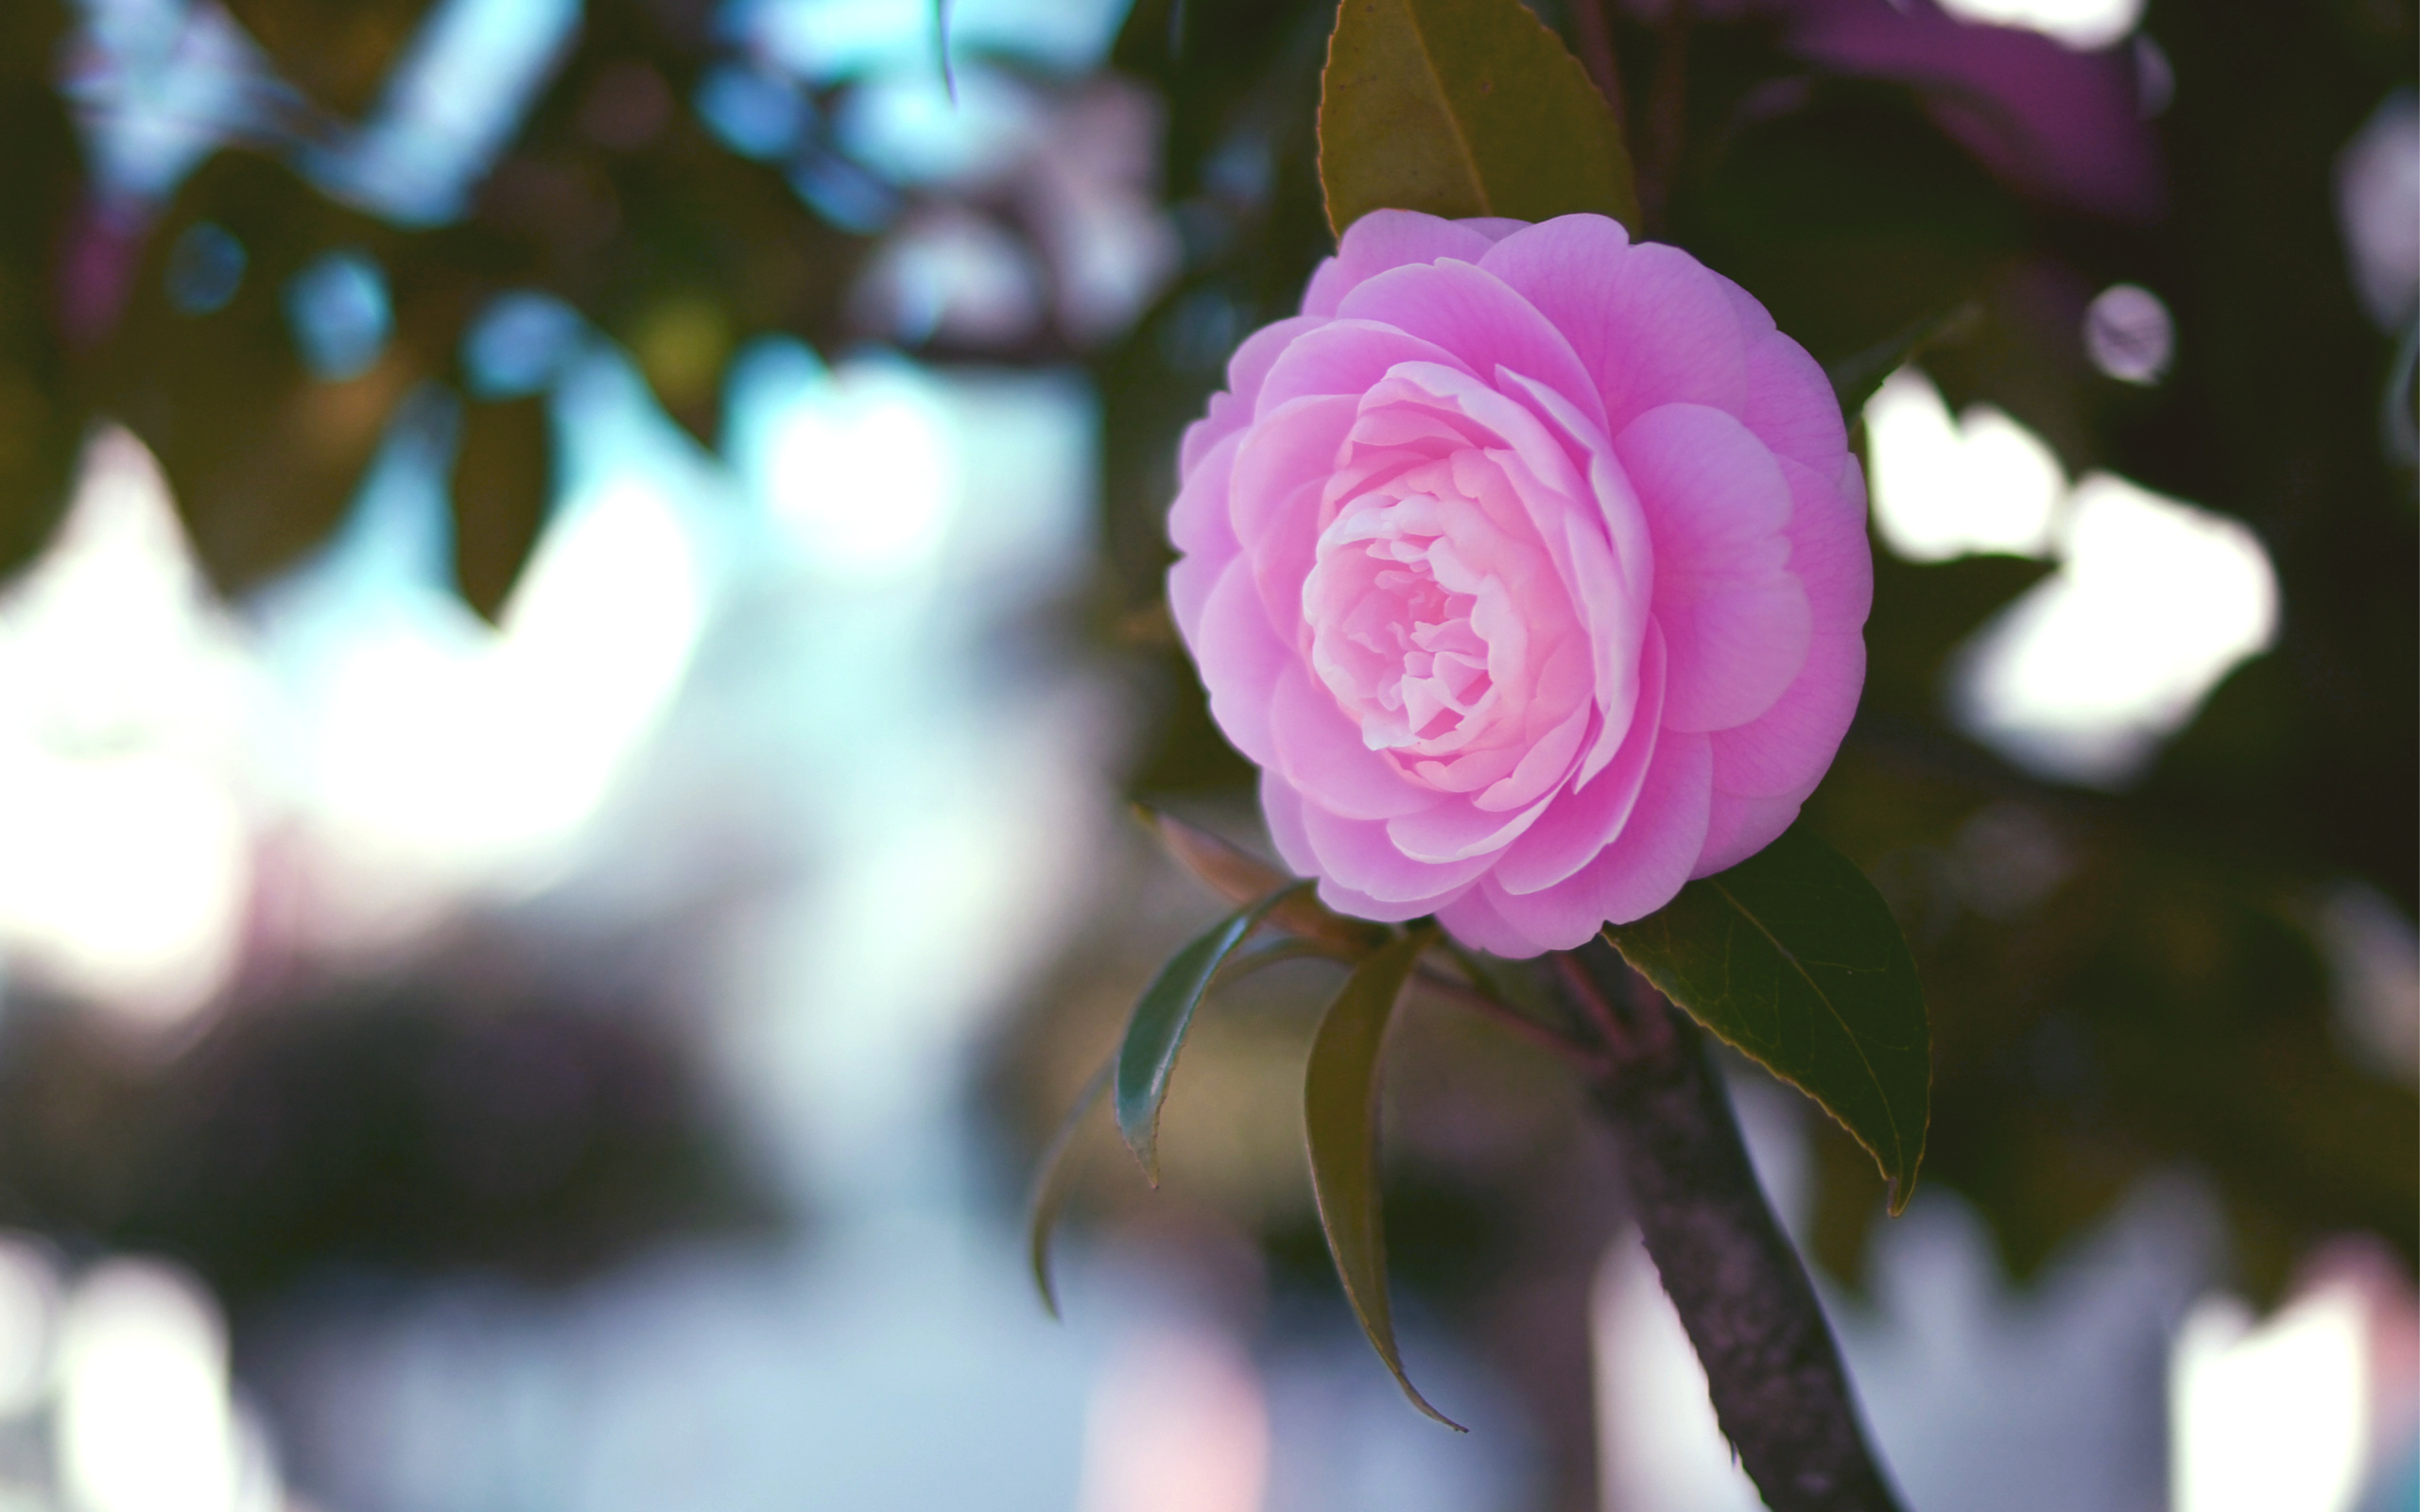 Camellia HD wallpaper, Background image, Nature's beauty, Floral treasures, 2560x1600 HD Desktop